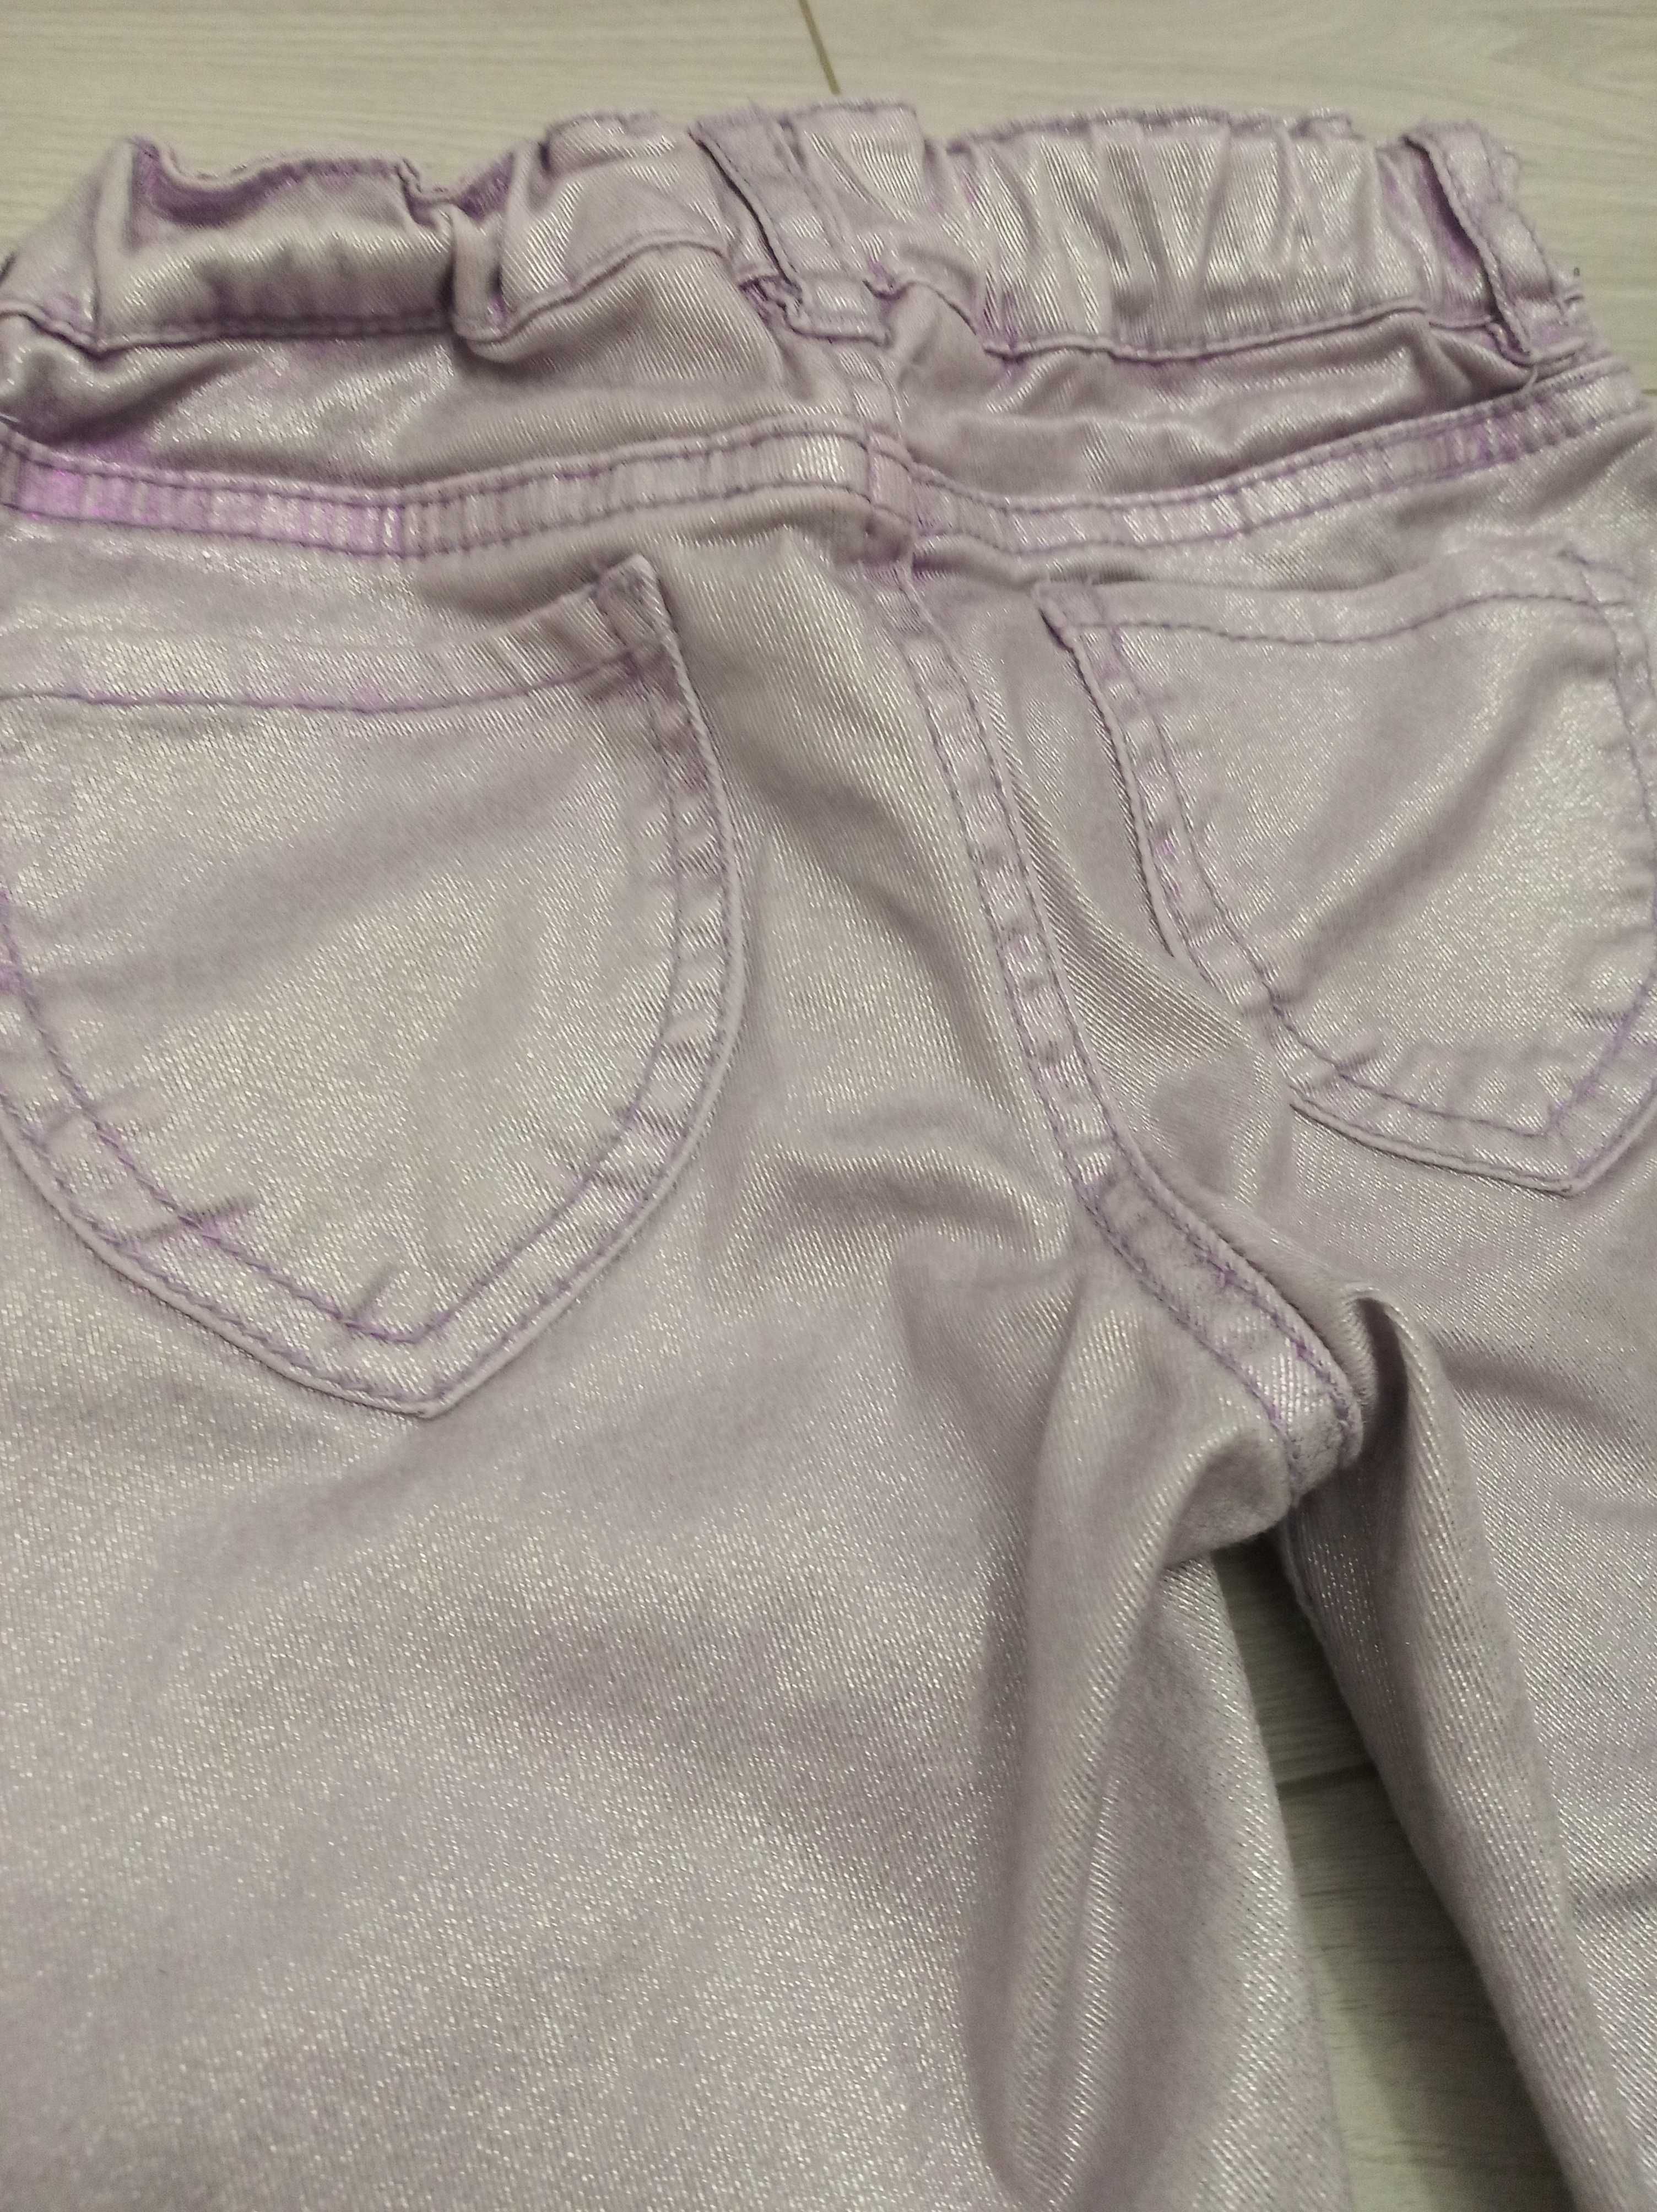 Spodnie spodenki H&M rozm.92 1,5-2 latka